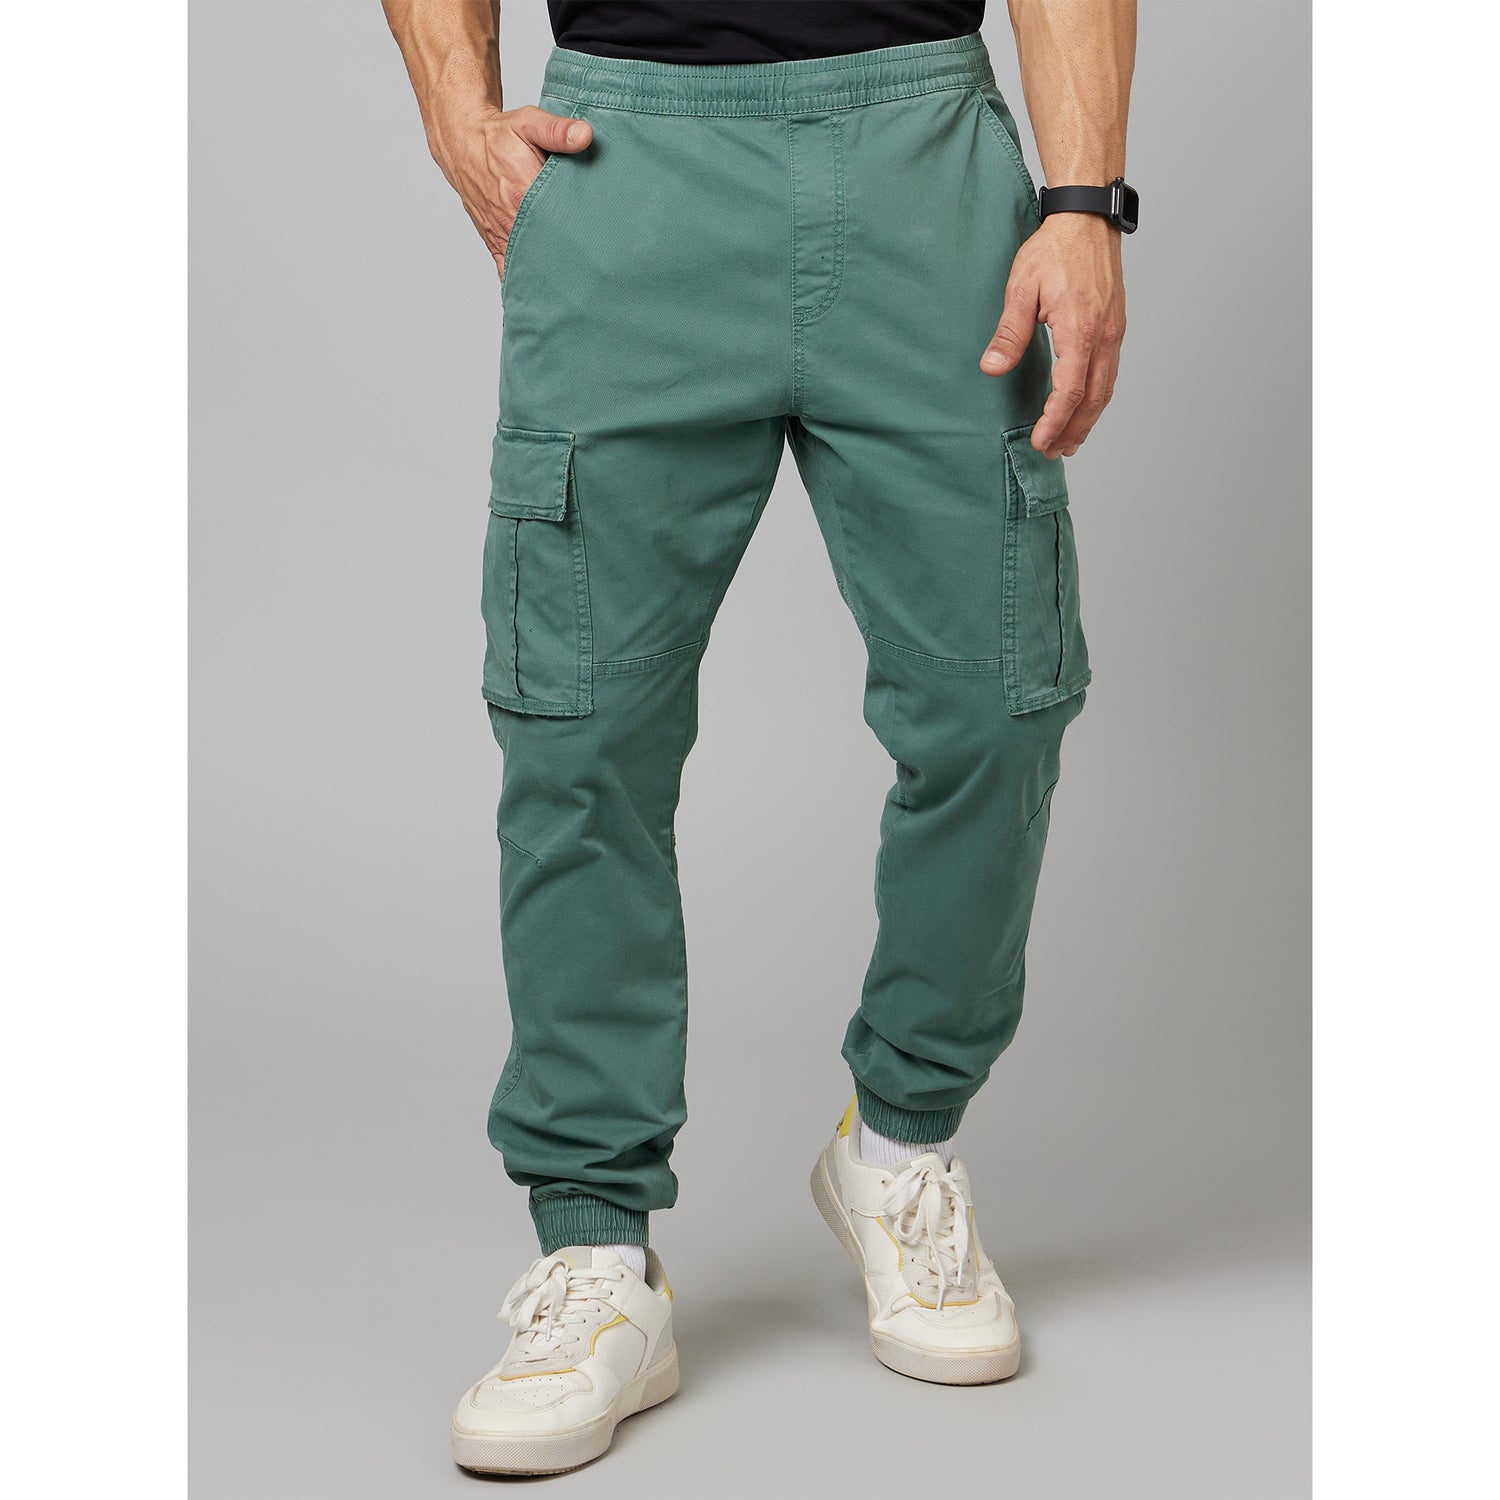 Green Cotton Cargos Trousers (DOCAR)